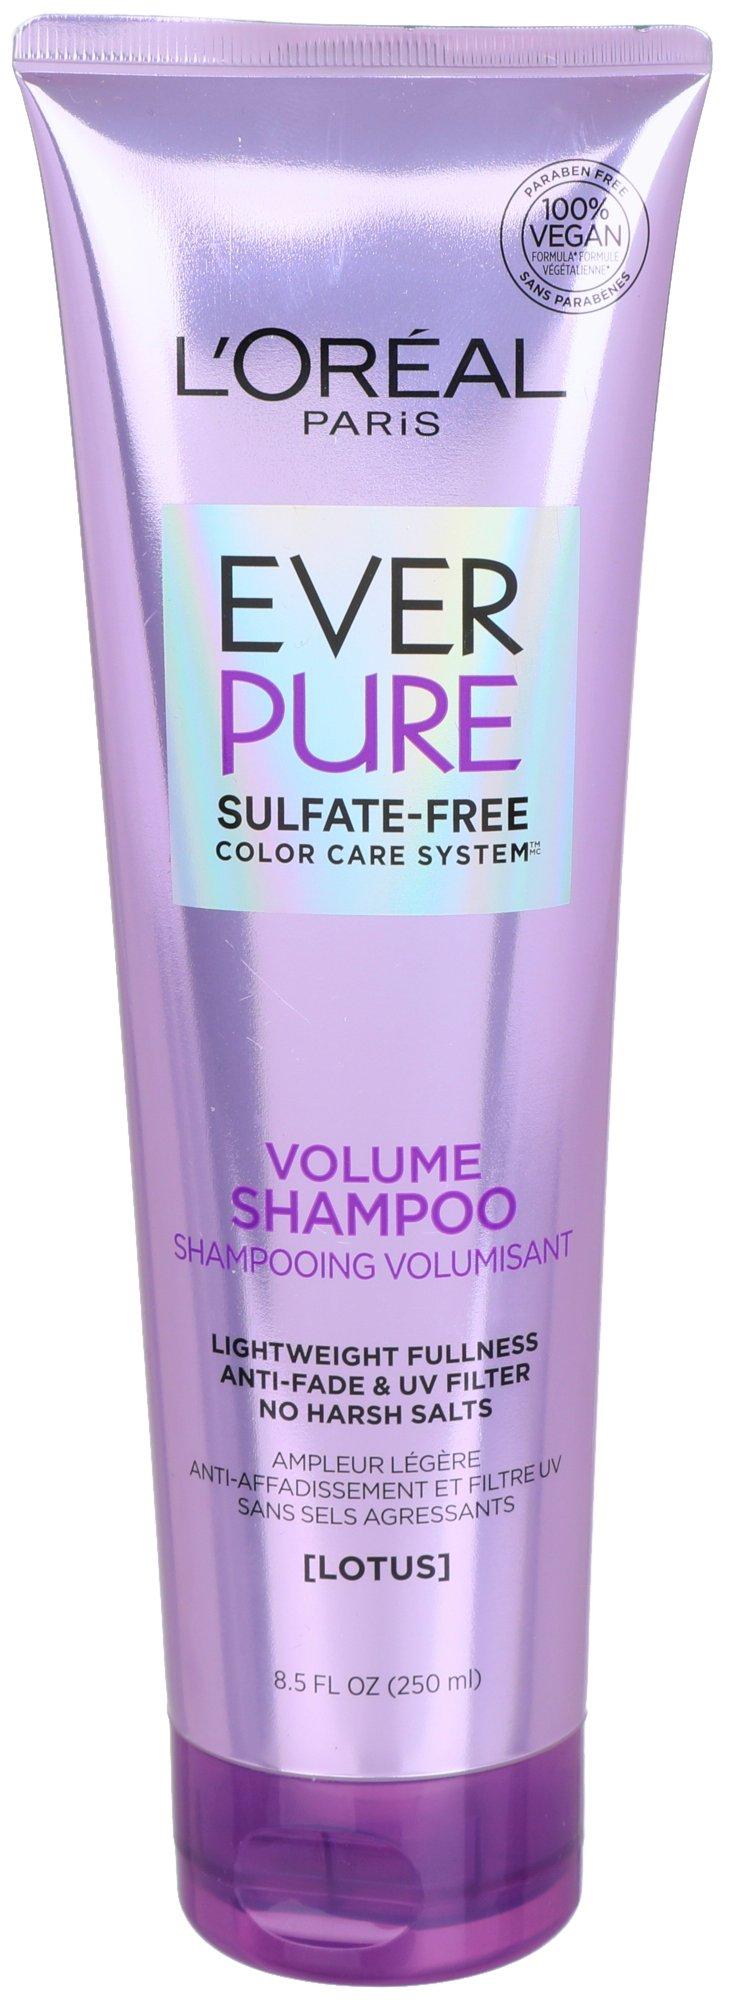 Ever Pure Lotus Volume Shampoo 8.5 Fl. Oz.